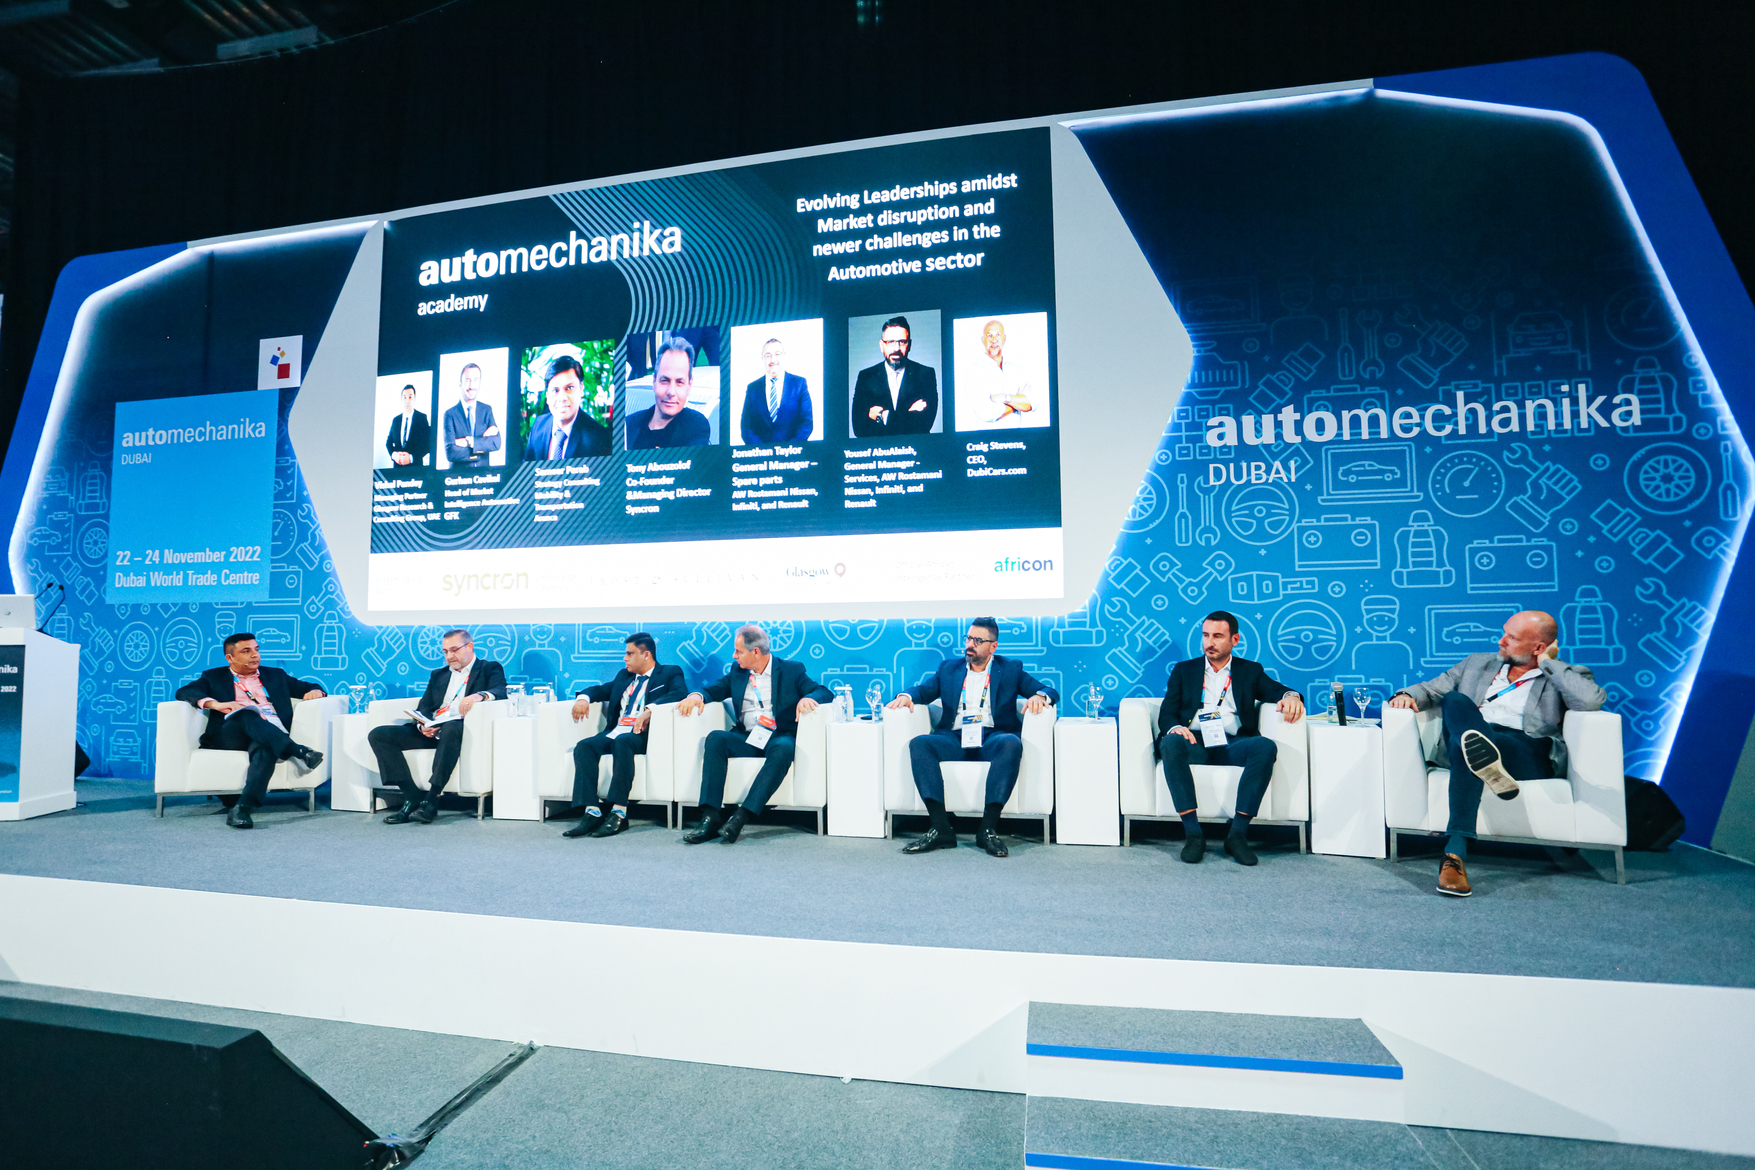 Almost Double the Size of Last Year, 19th Edition of Automechanika Dubai Opens at Dubai World Trade Centre